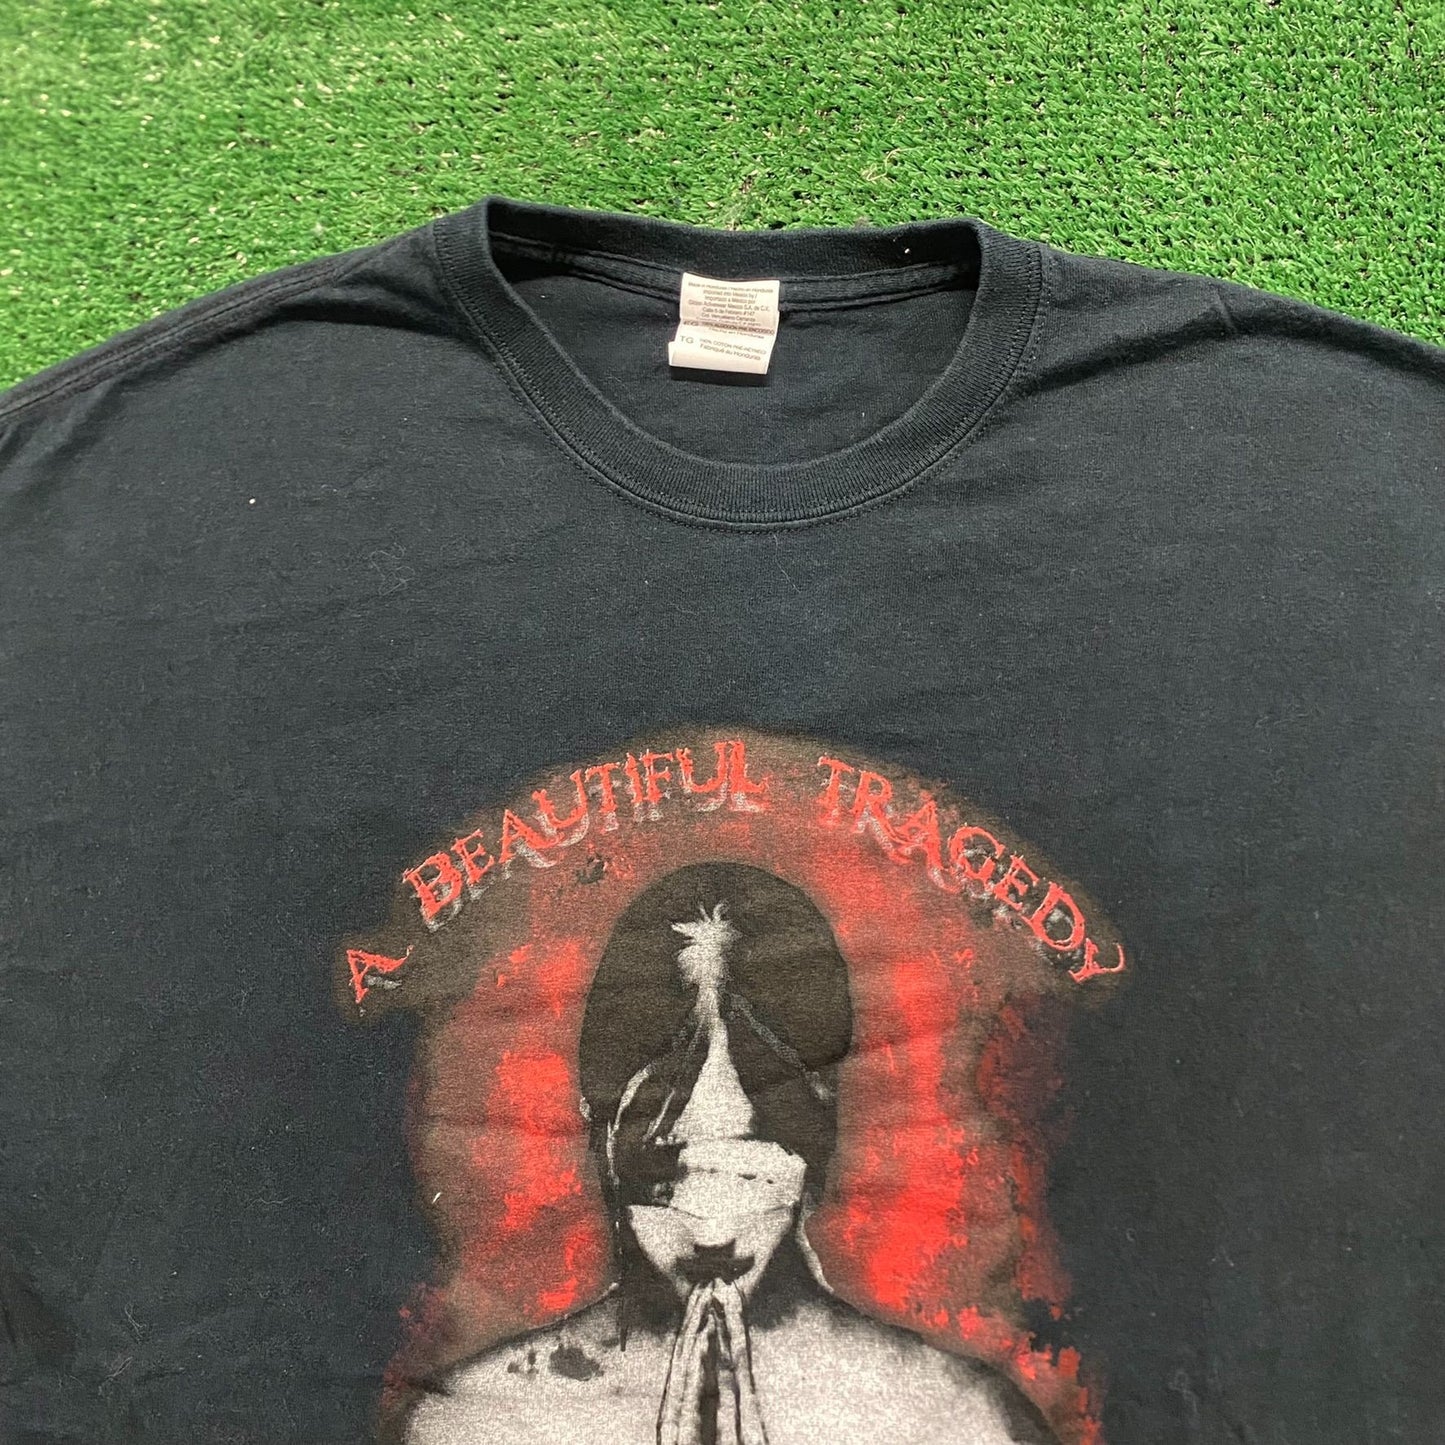 Beautiful Tragedy Vintage Emo Band T-Shirt